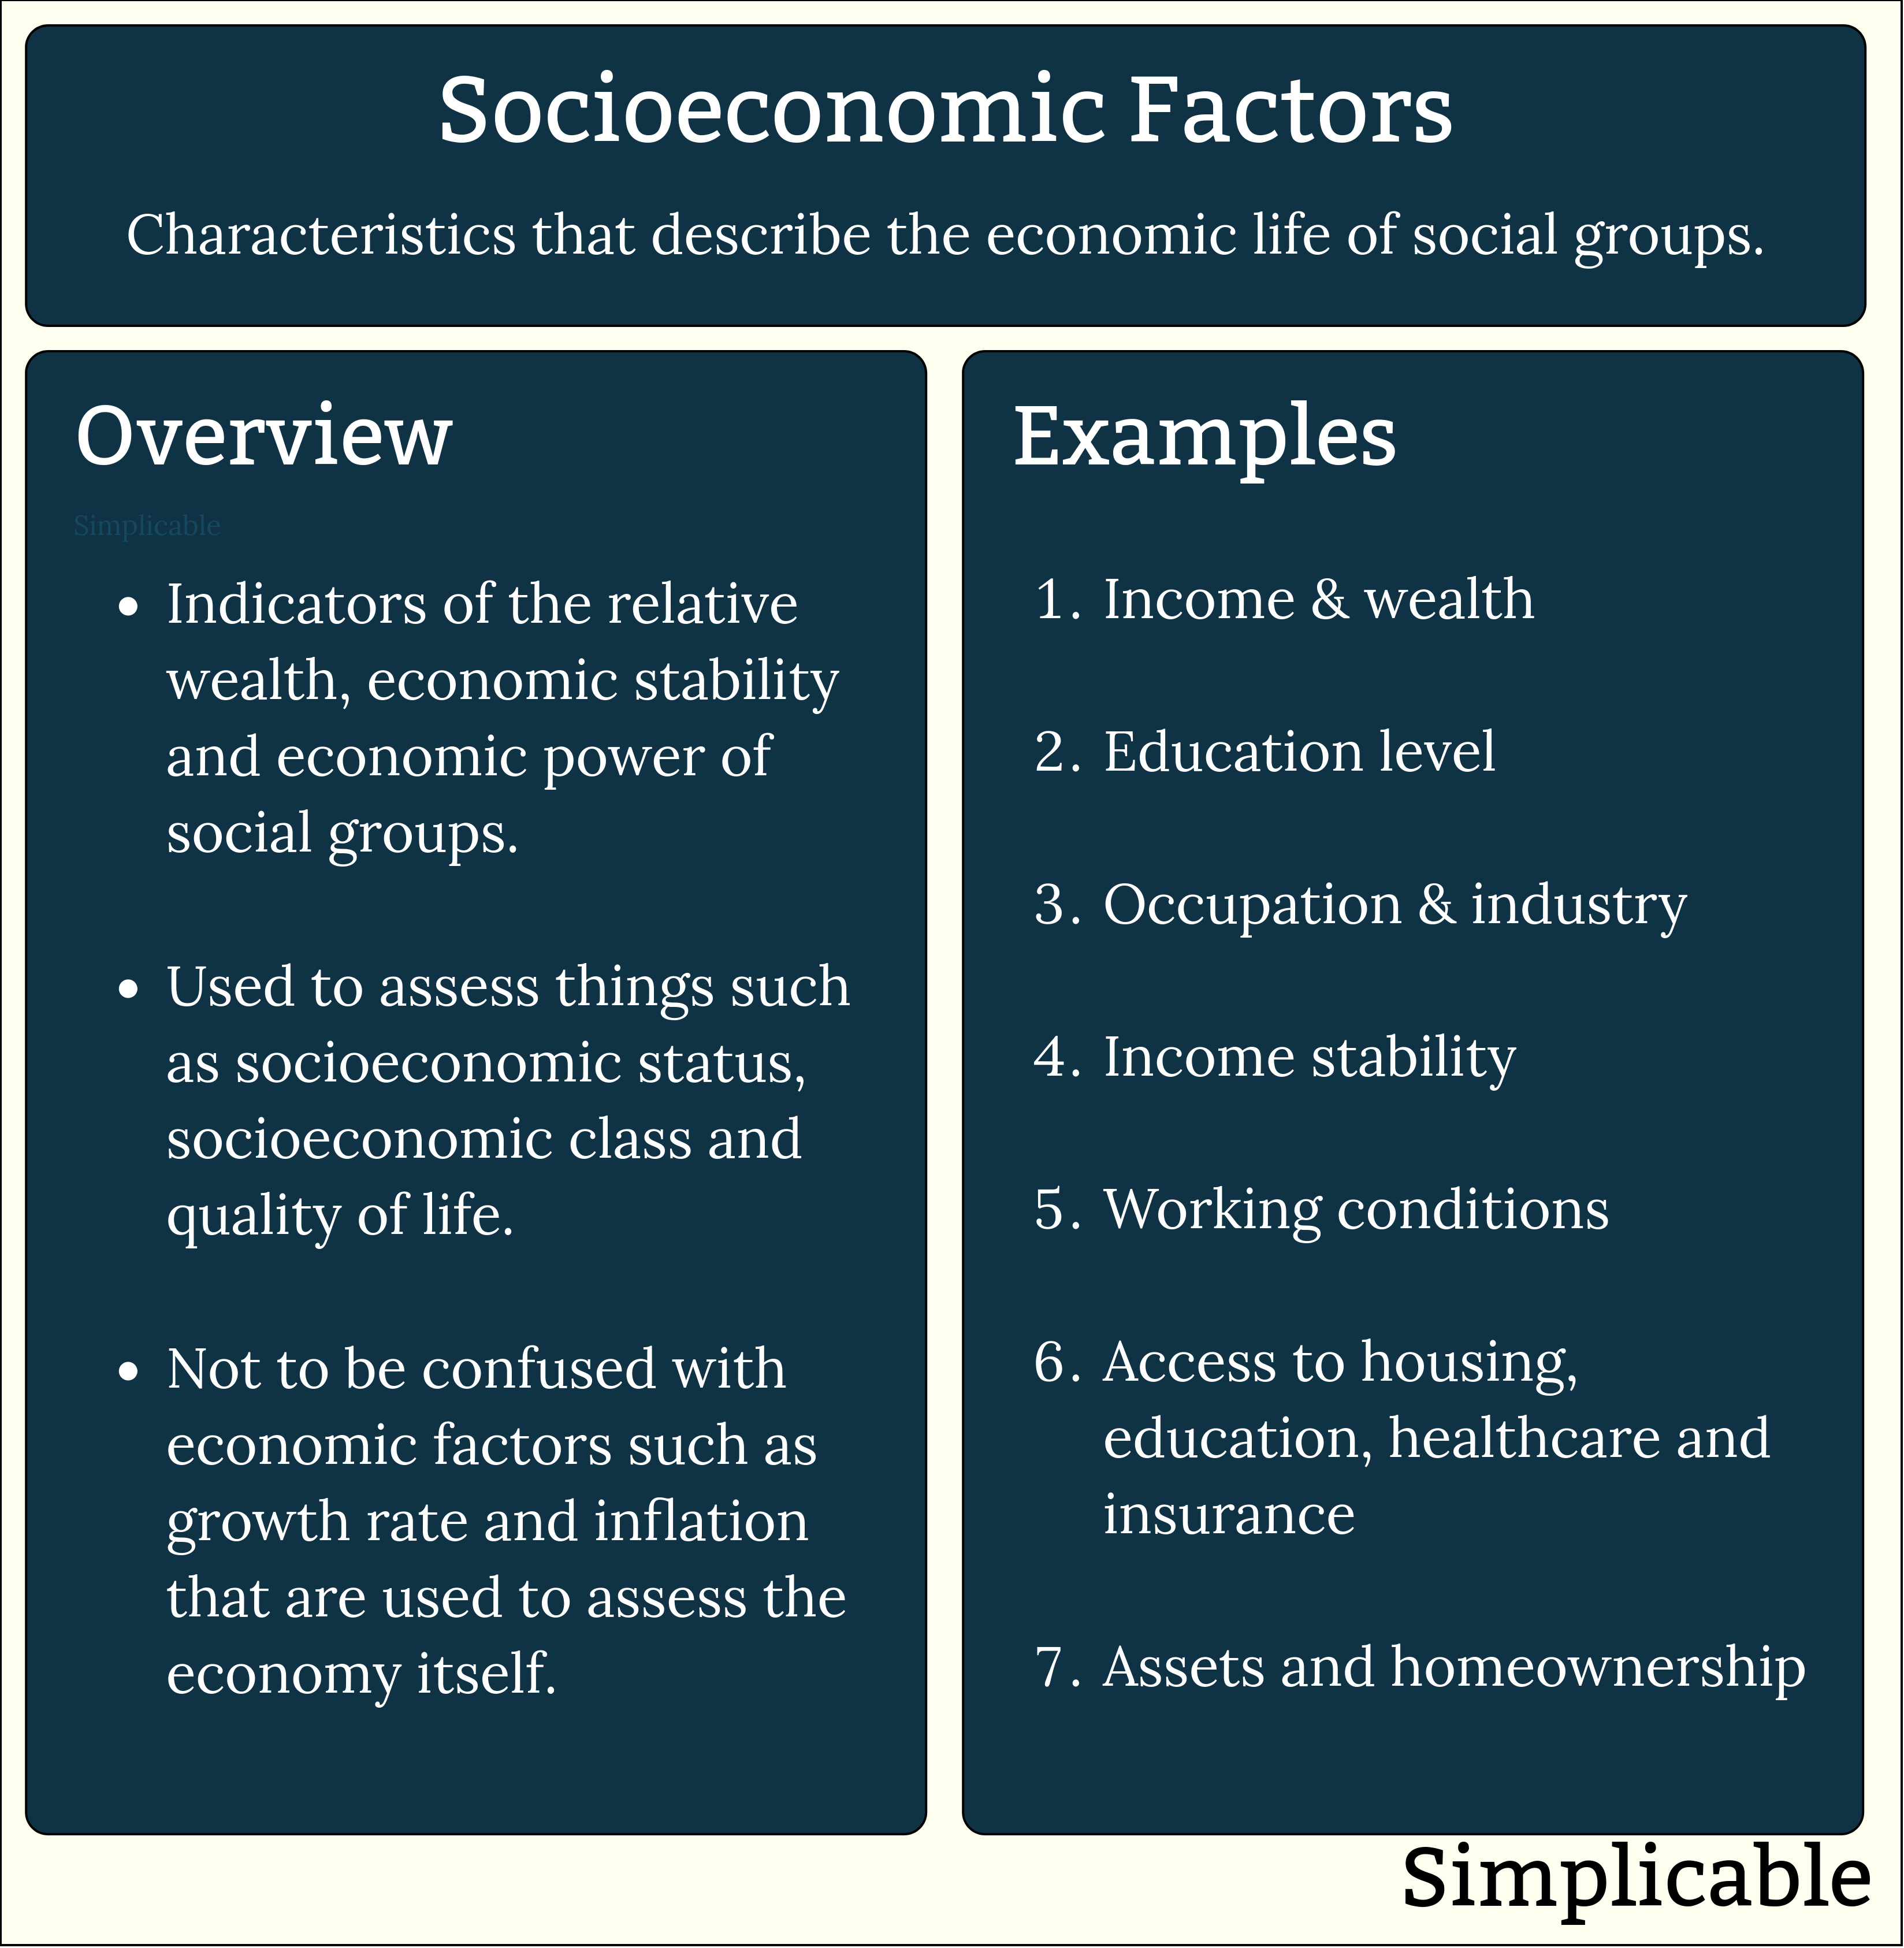 socioeconomic factors overview and examples